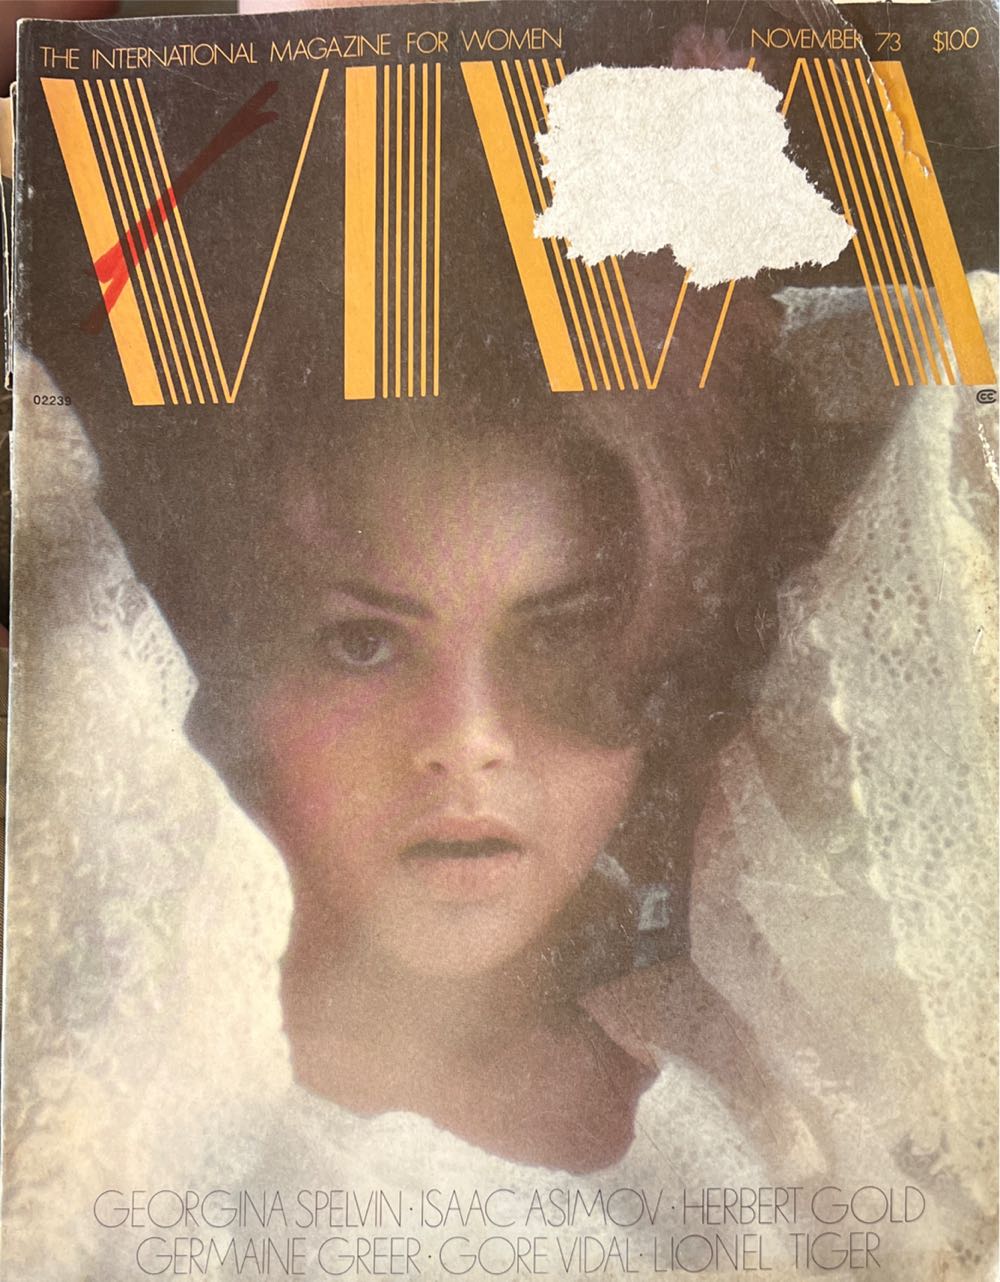 Viva  (November) magazine collectible - Main Image 1